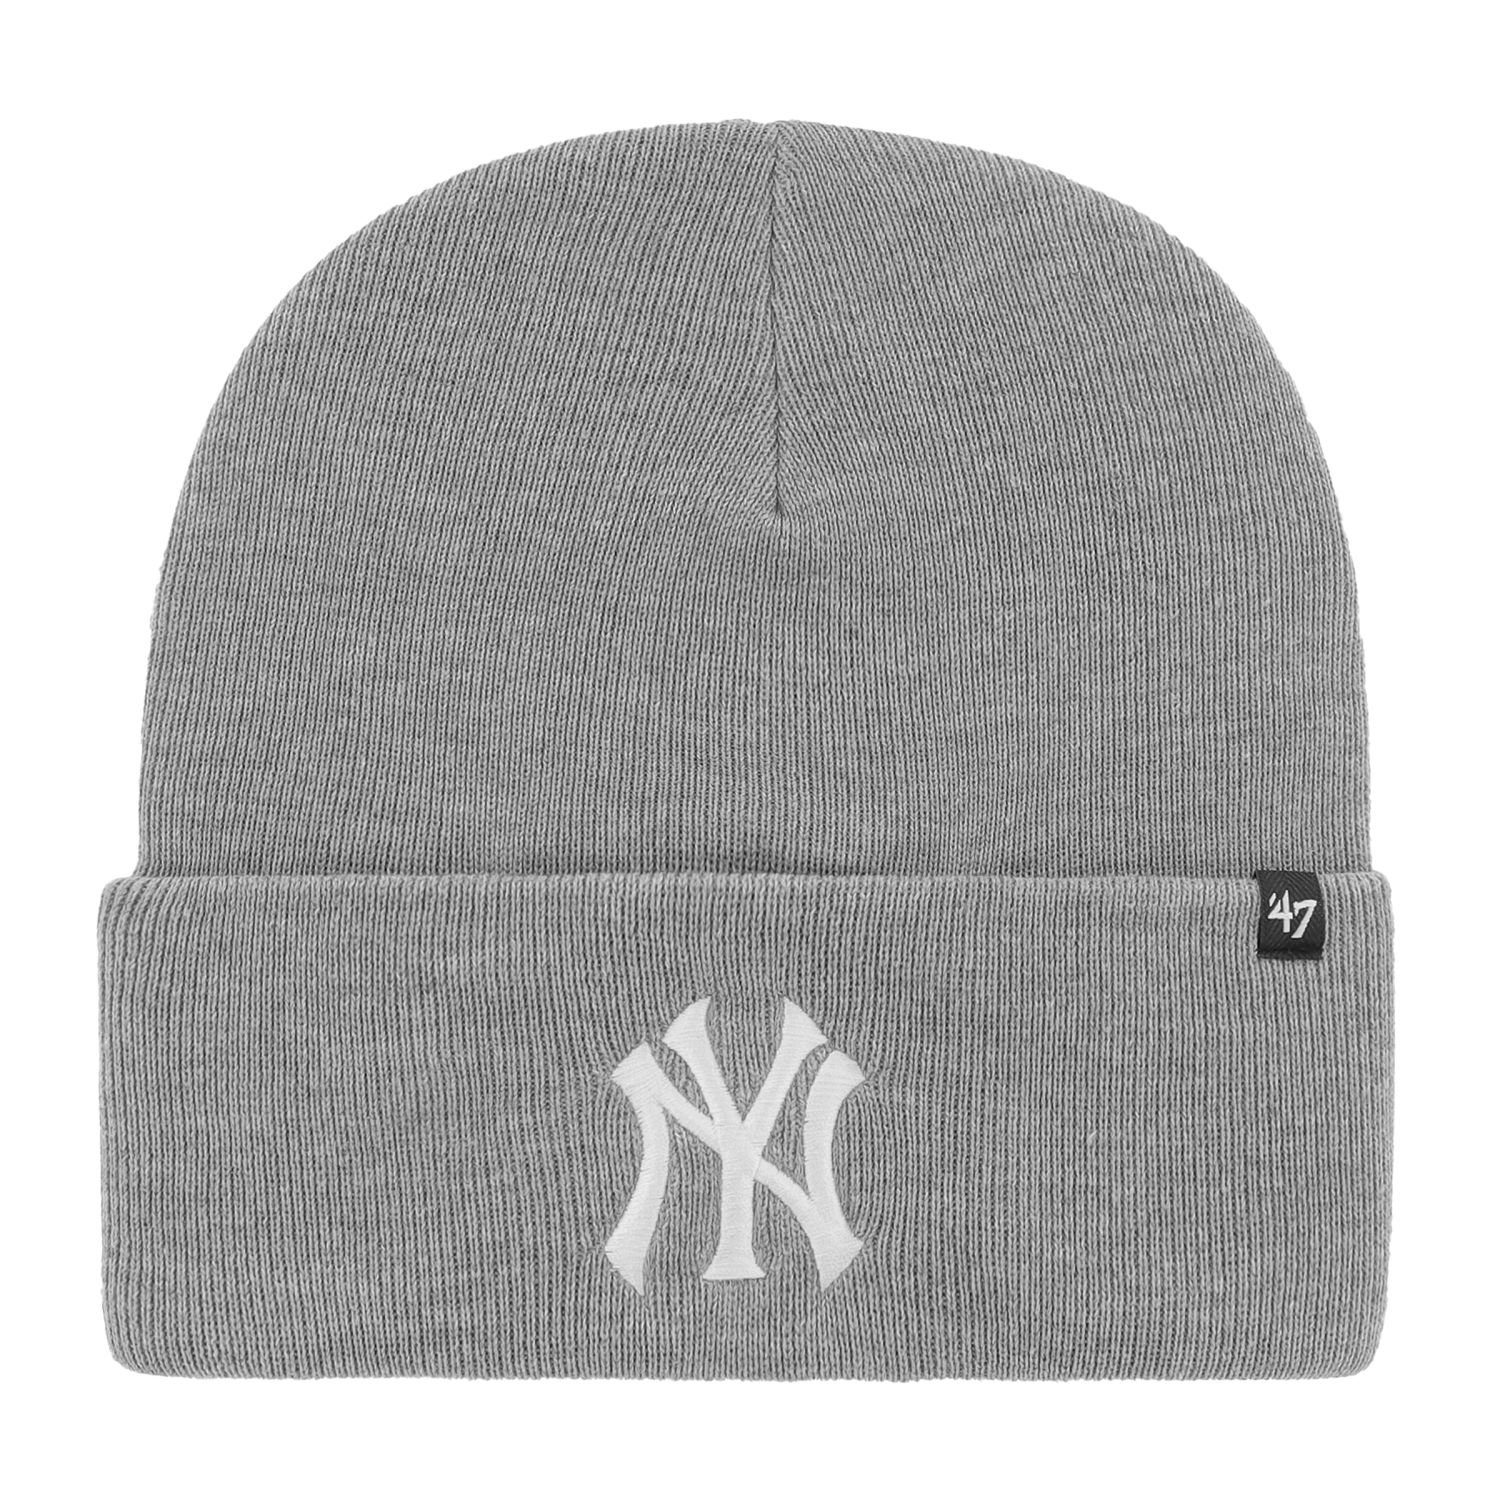 Yankees Beanie REFRESH Fleecemütze New Brand 47 York